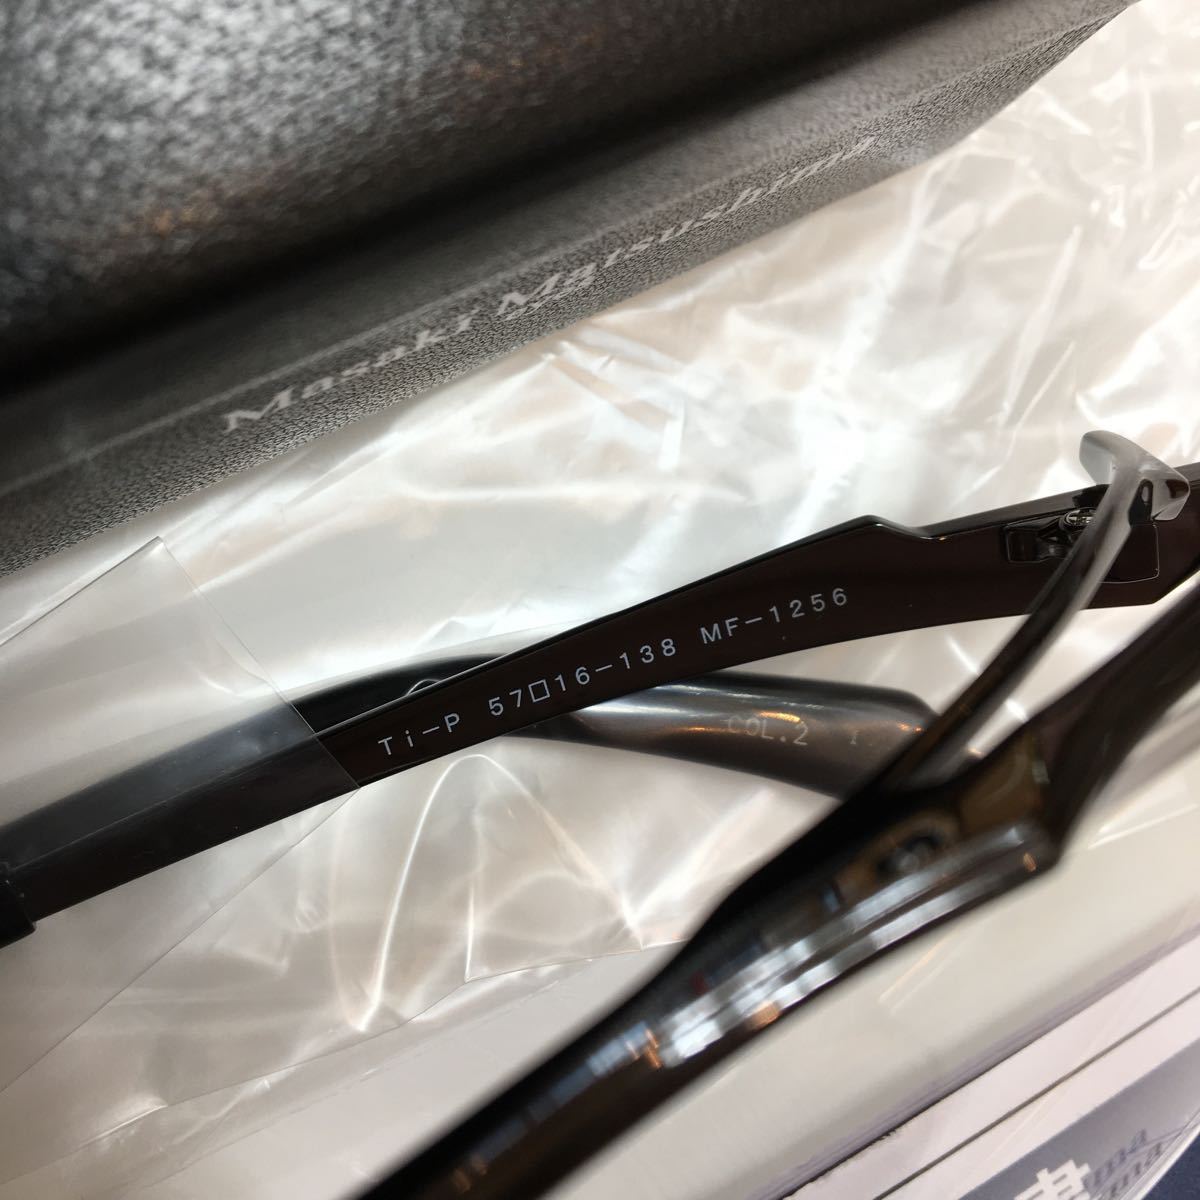 Masaki Matsushima マサキマツシマ メガネフレーム 高品質 日本製 MF-1256 カラー2 ガンメタル/シルバー メガネ 眼鏡 MF MF- 1256_画像2